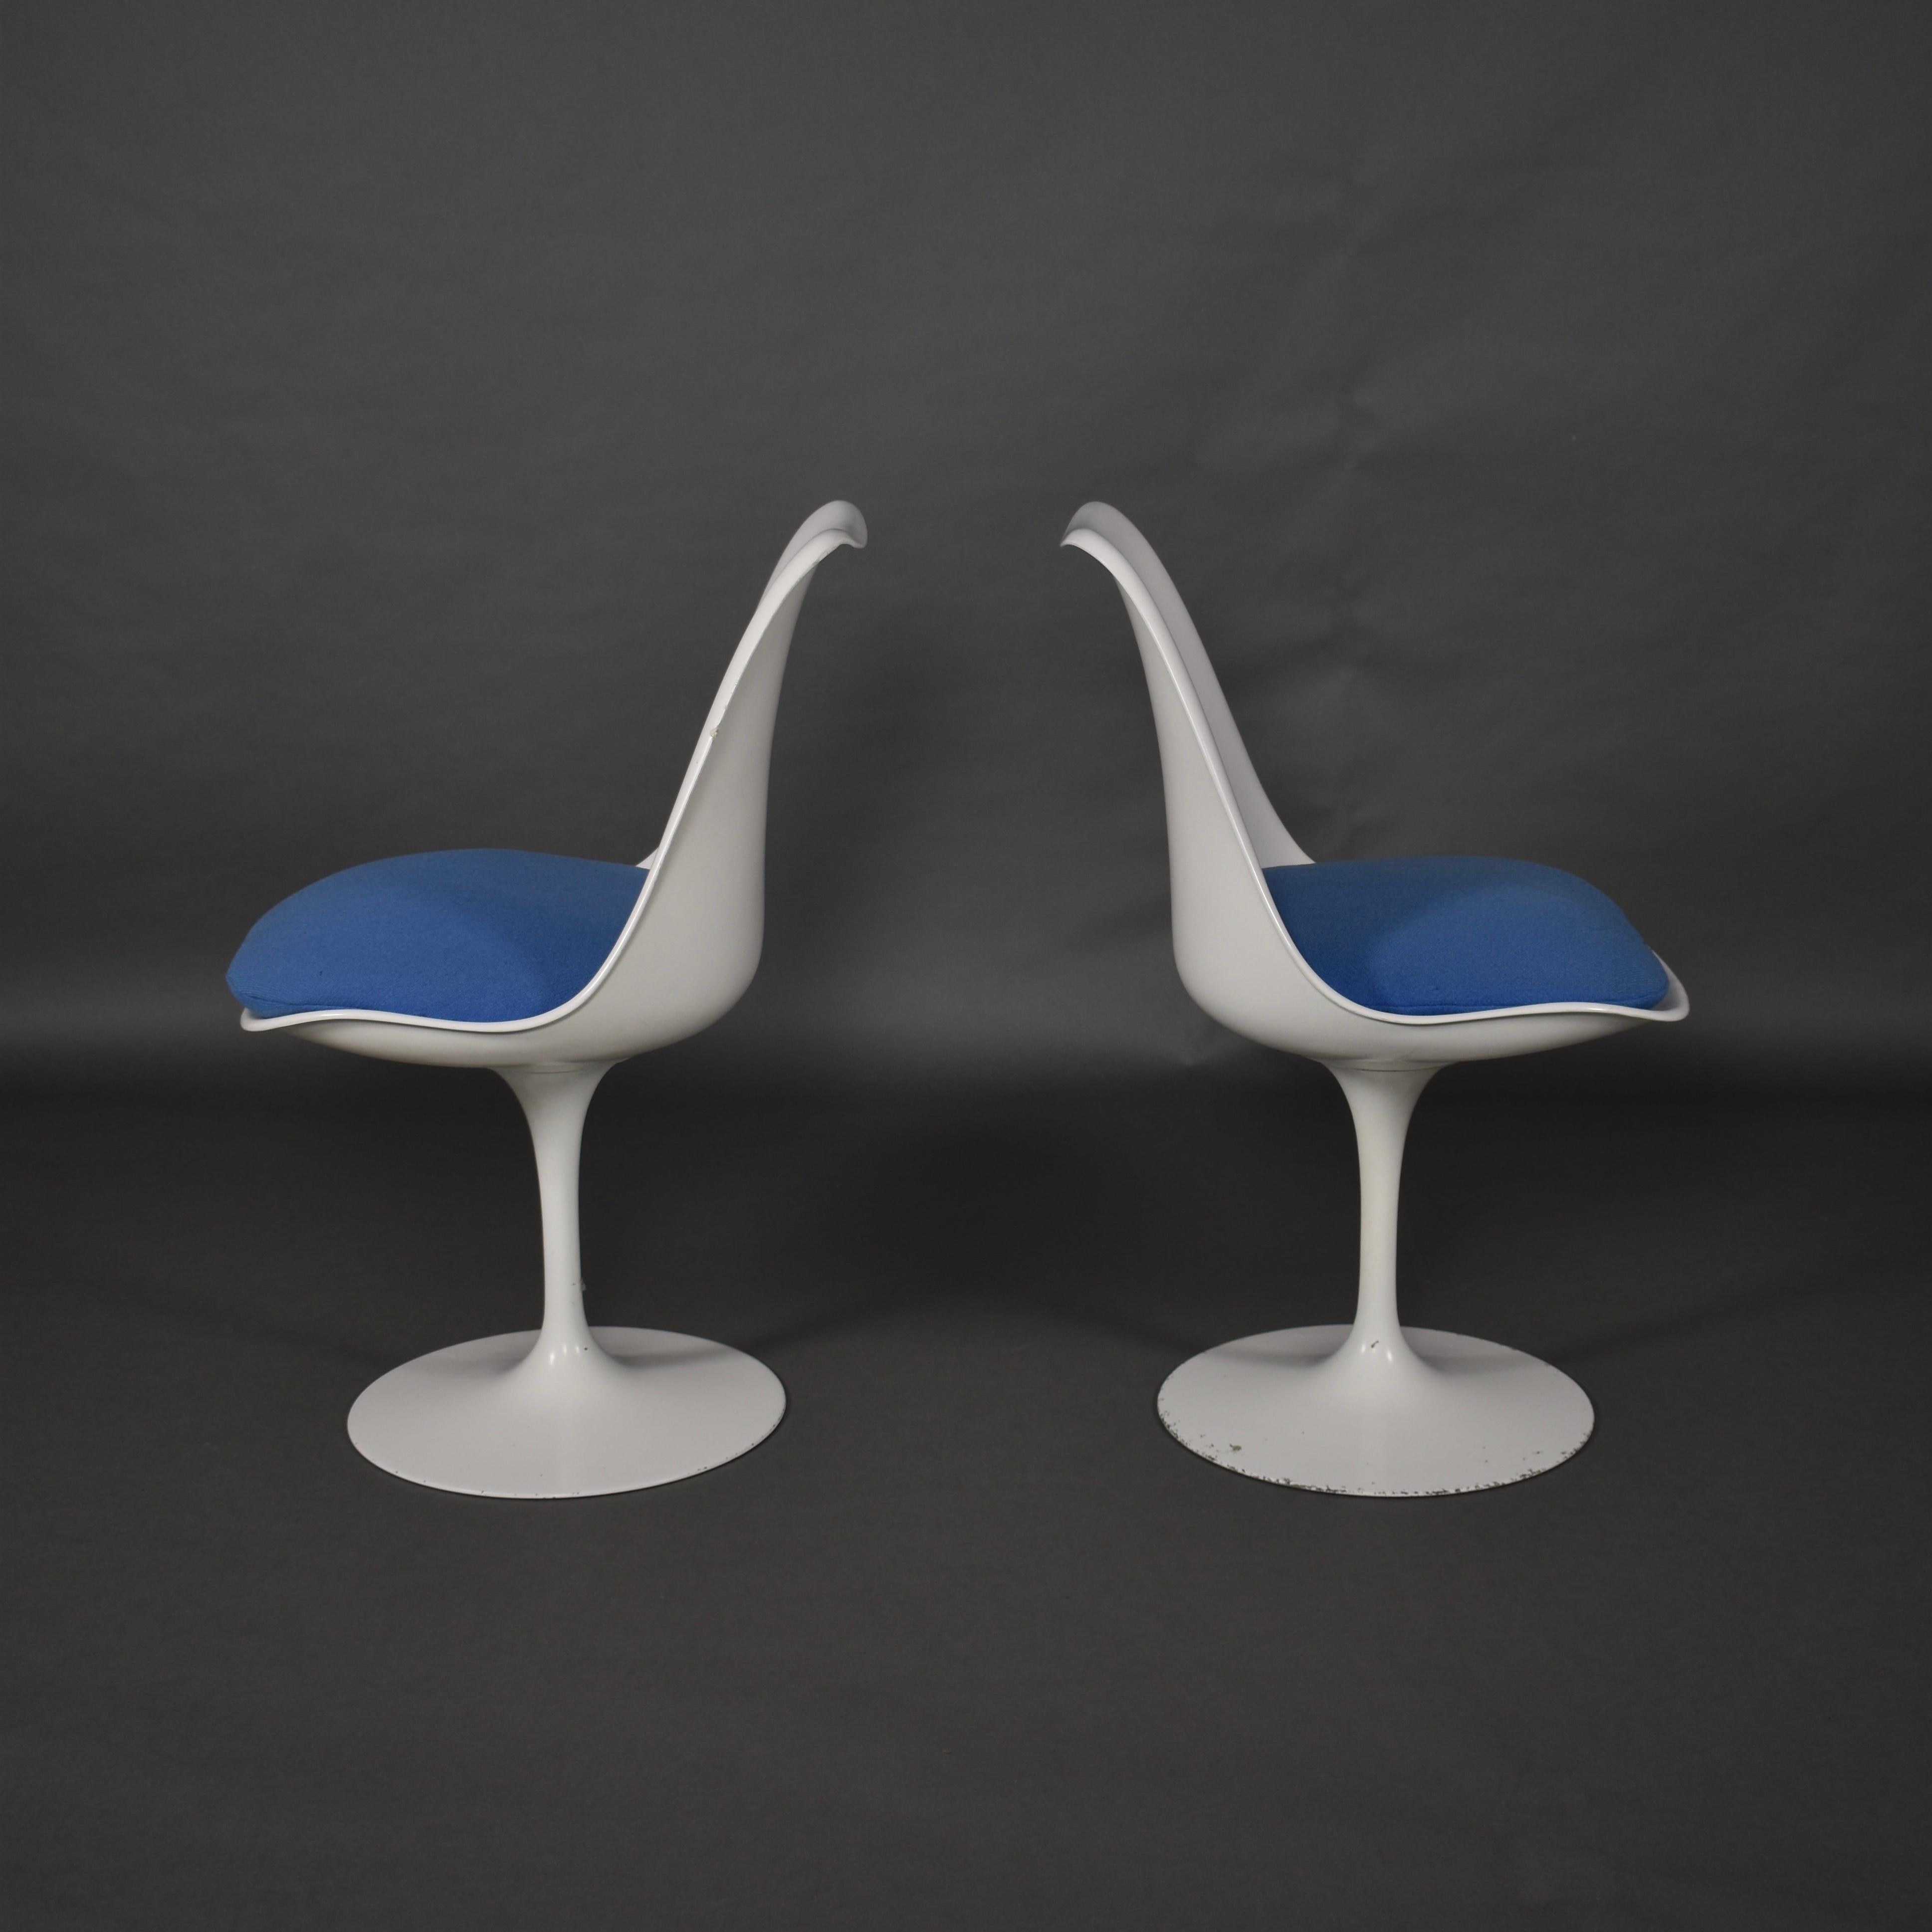 Two Eero Saarinen for Knoll Tulip chairs, circa 1960

The cushions are not original.

Manufacturer: Knoll International 

Designer: Eero Saarinen

Country: Finland / USA

Model: 150 Tulip armchairs

Material: Fiberglass /